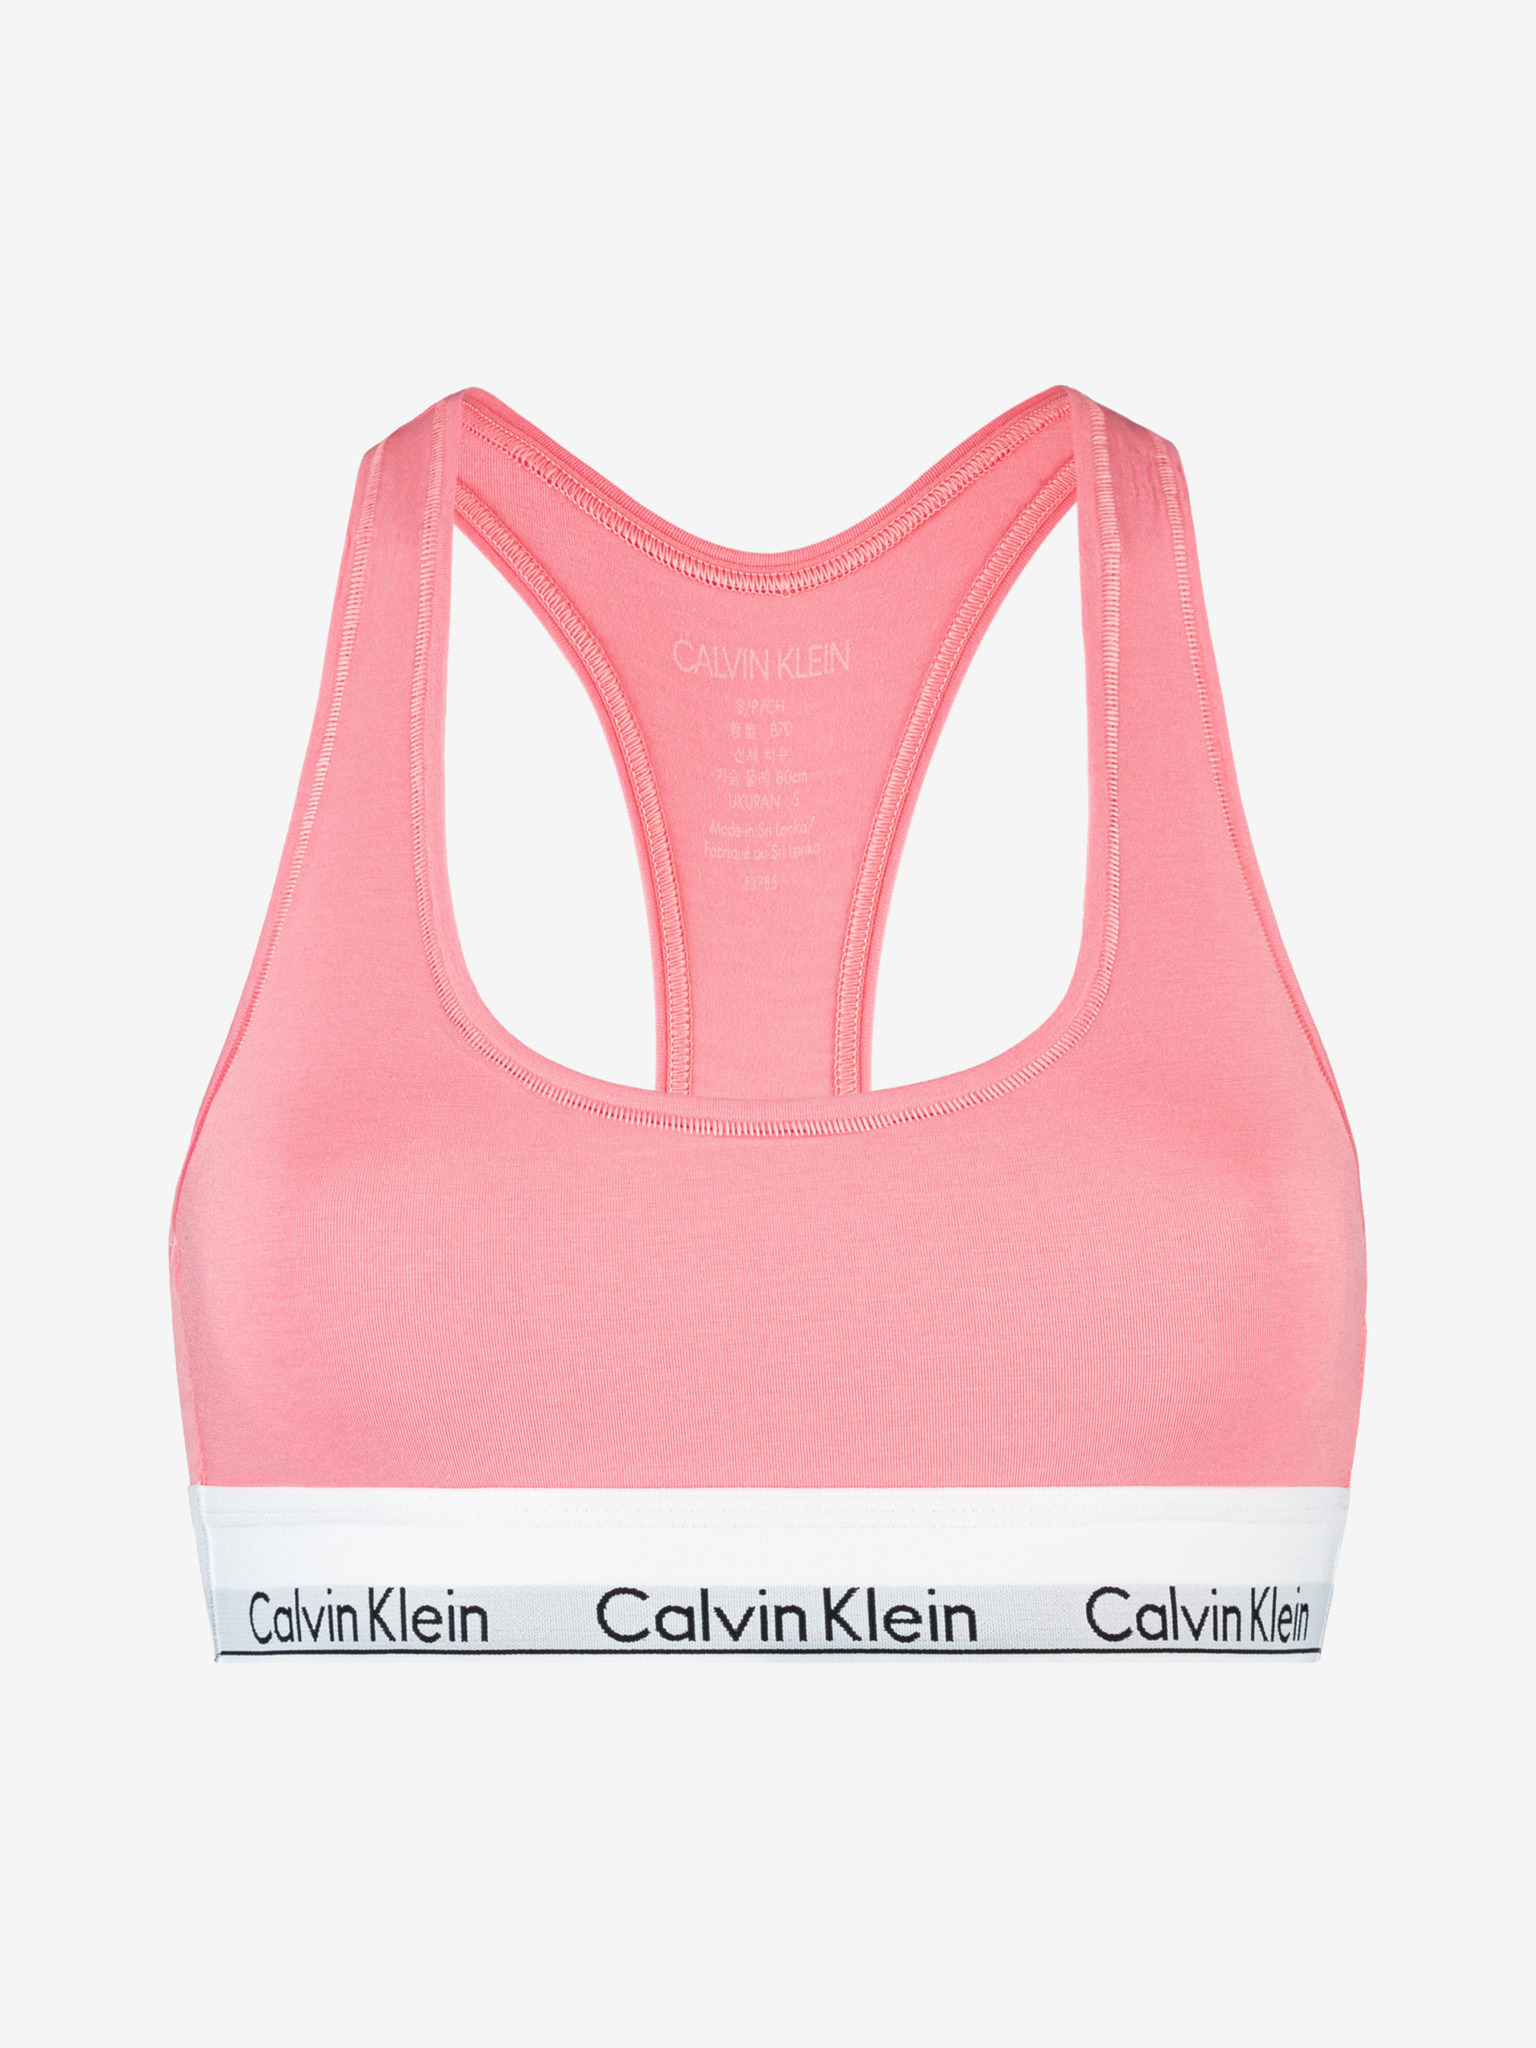 Calvin Klein Pf2t0531-kin-large Sports Bra in Pink